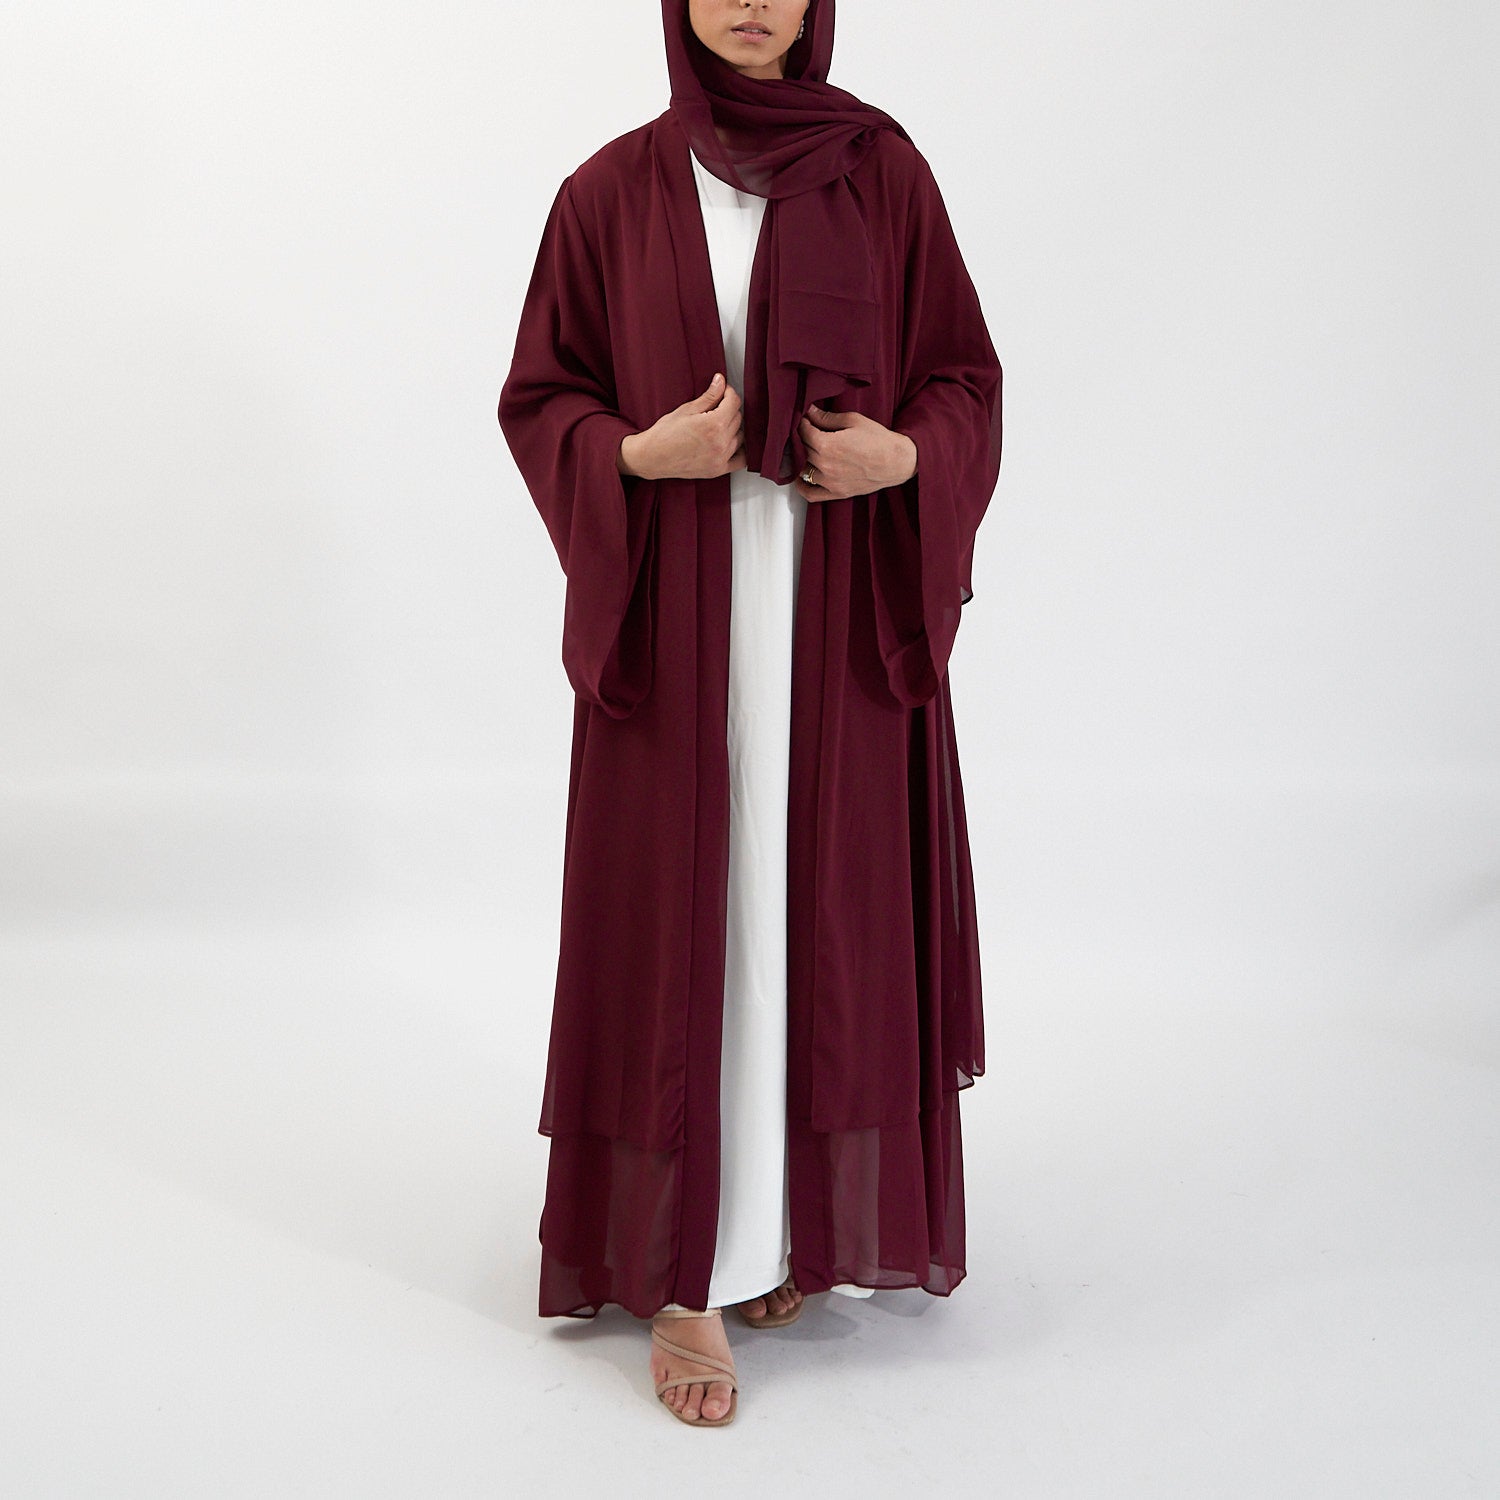 Aisha Black Abaya Muslim Women Fashion